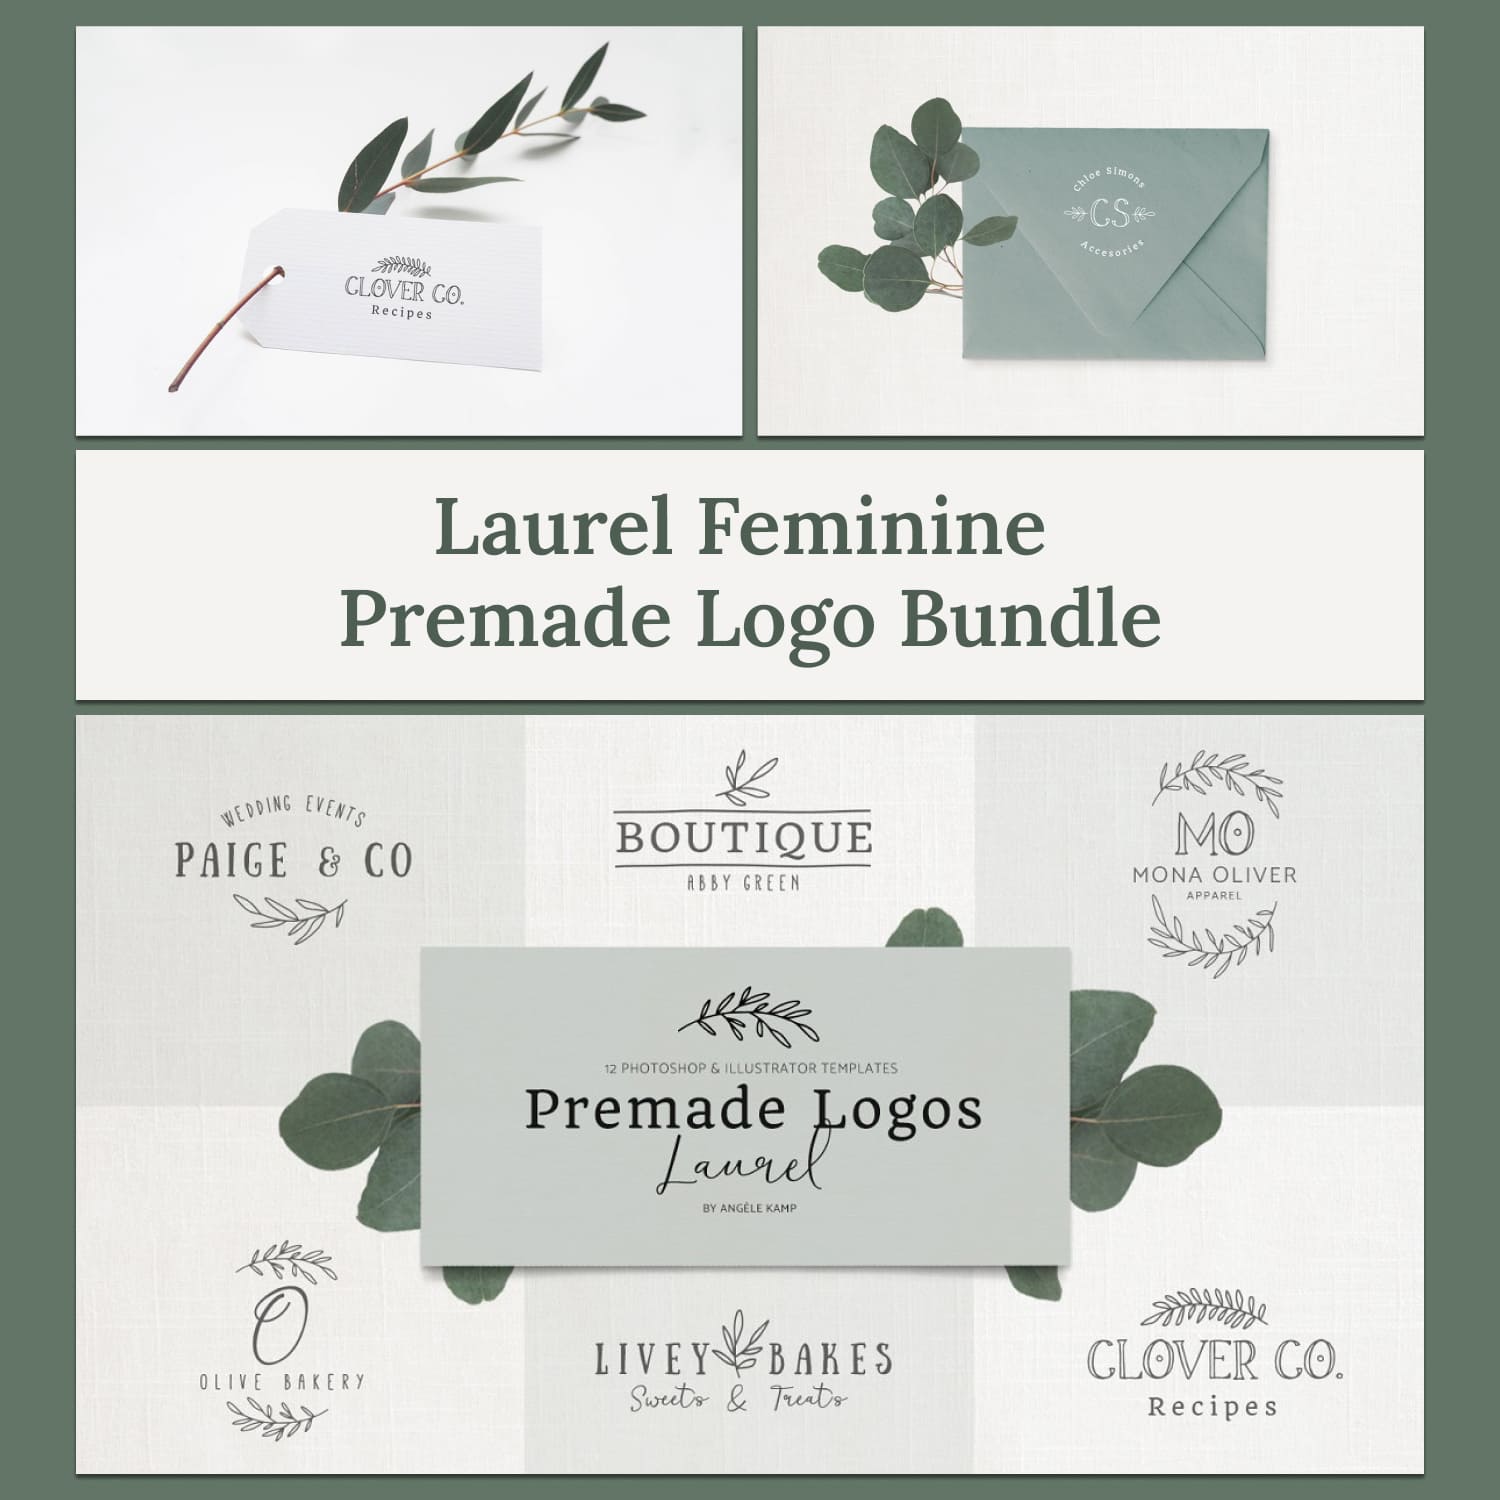 Premade Logo Bundle Laurel Feminine cover image.